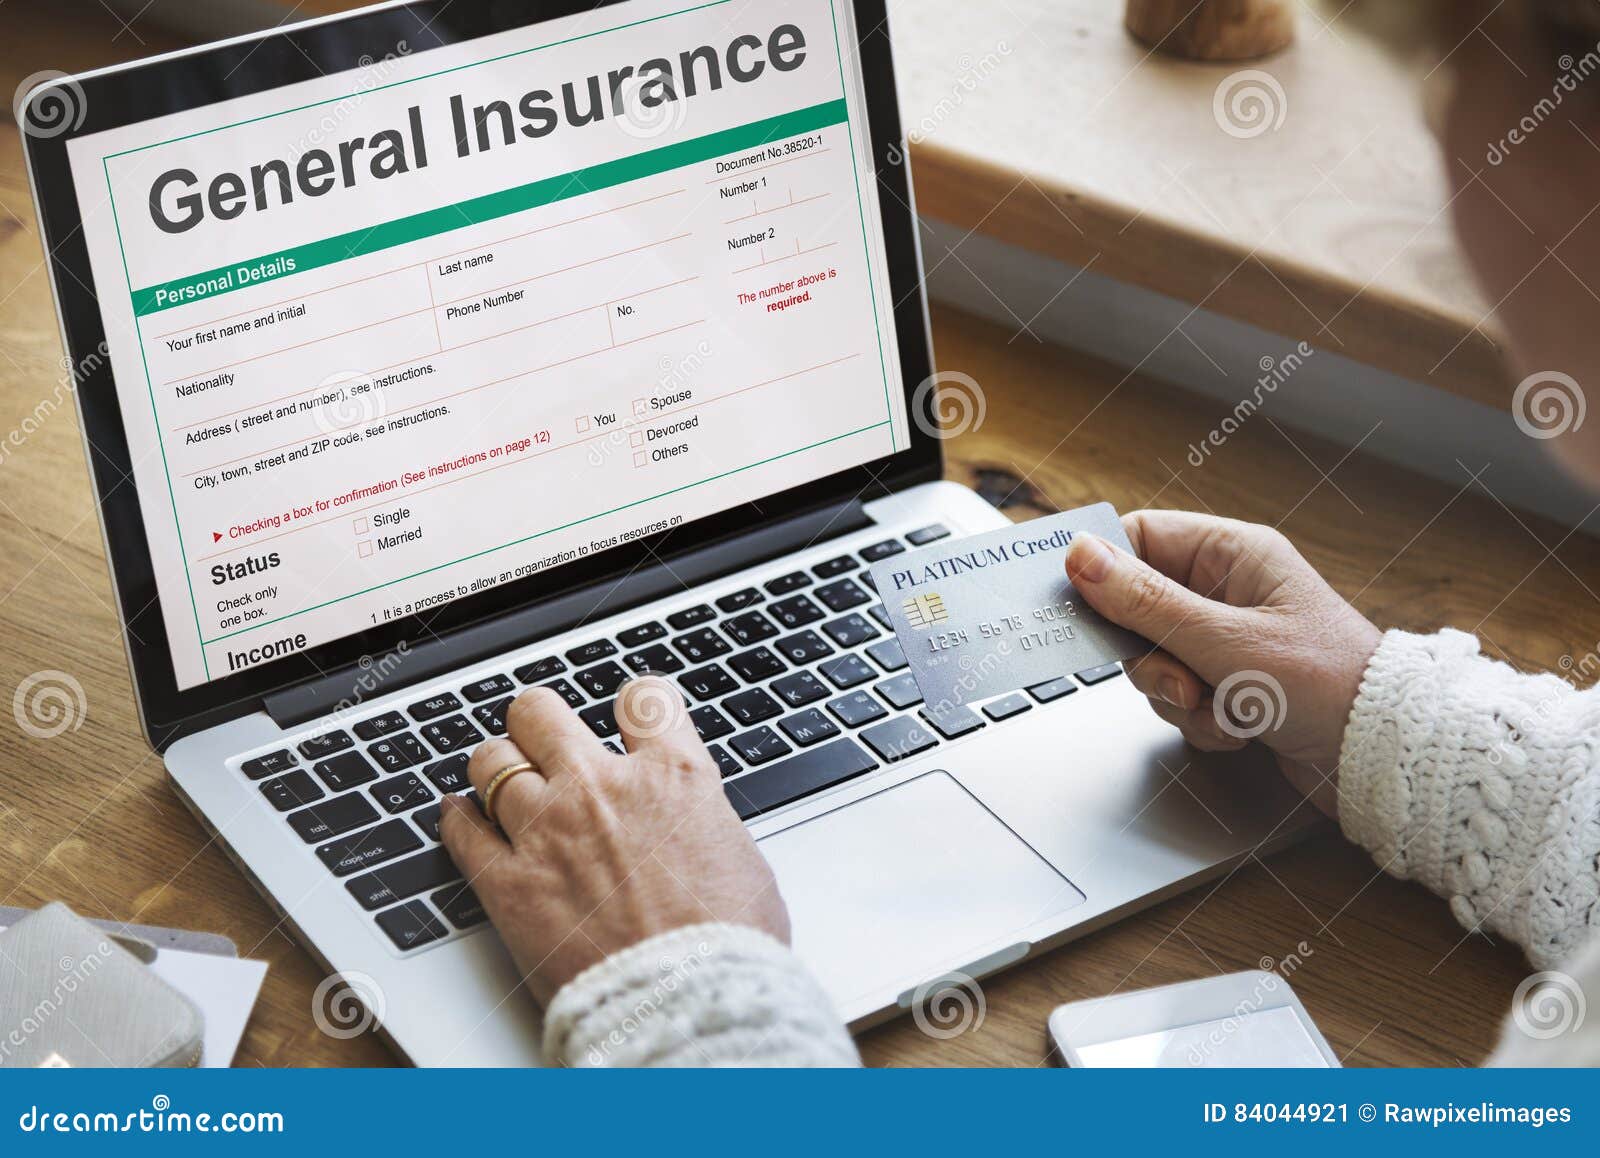 general-insurance-rebate-form-information-concept-stock-image-image